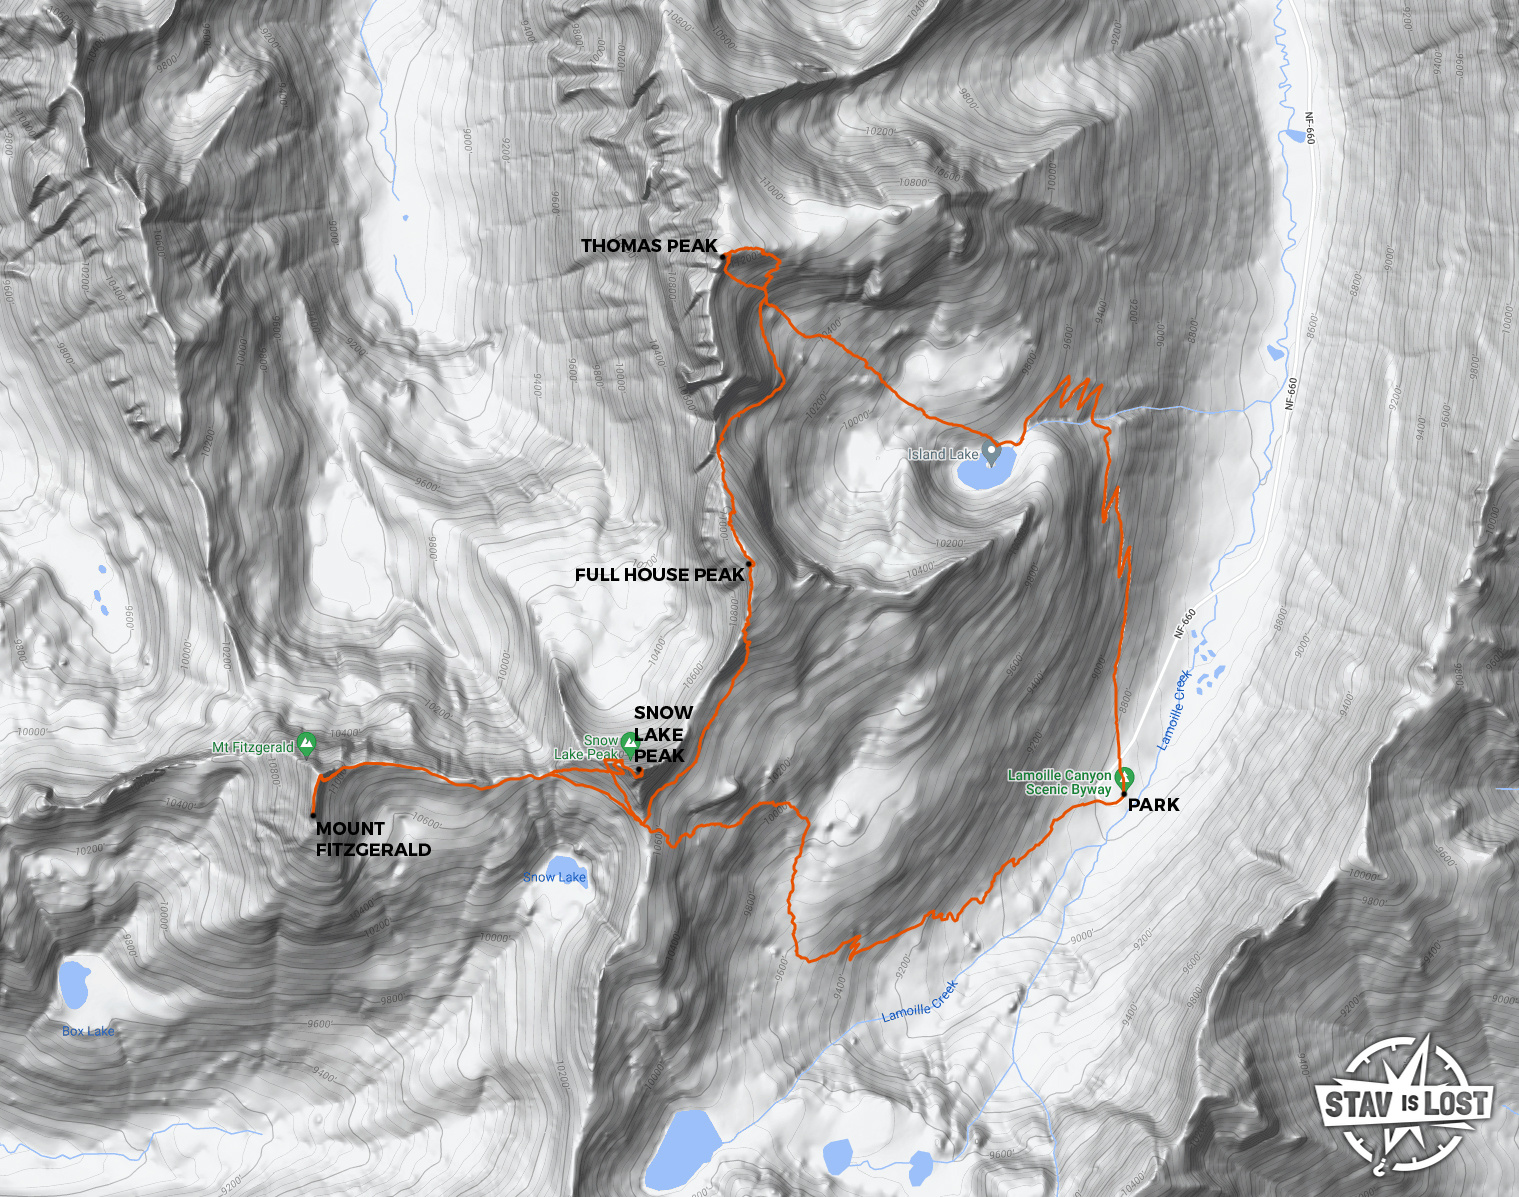 map for Thomas Peak, Full House Peak, Snow Lake Peak, Mount Fitzgerald by stav is lost